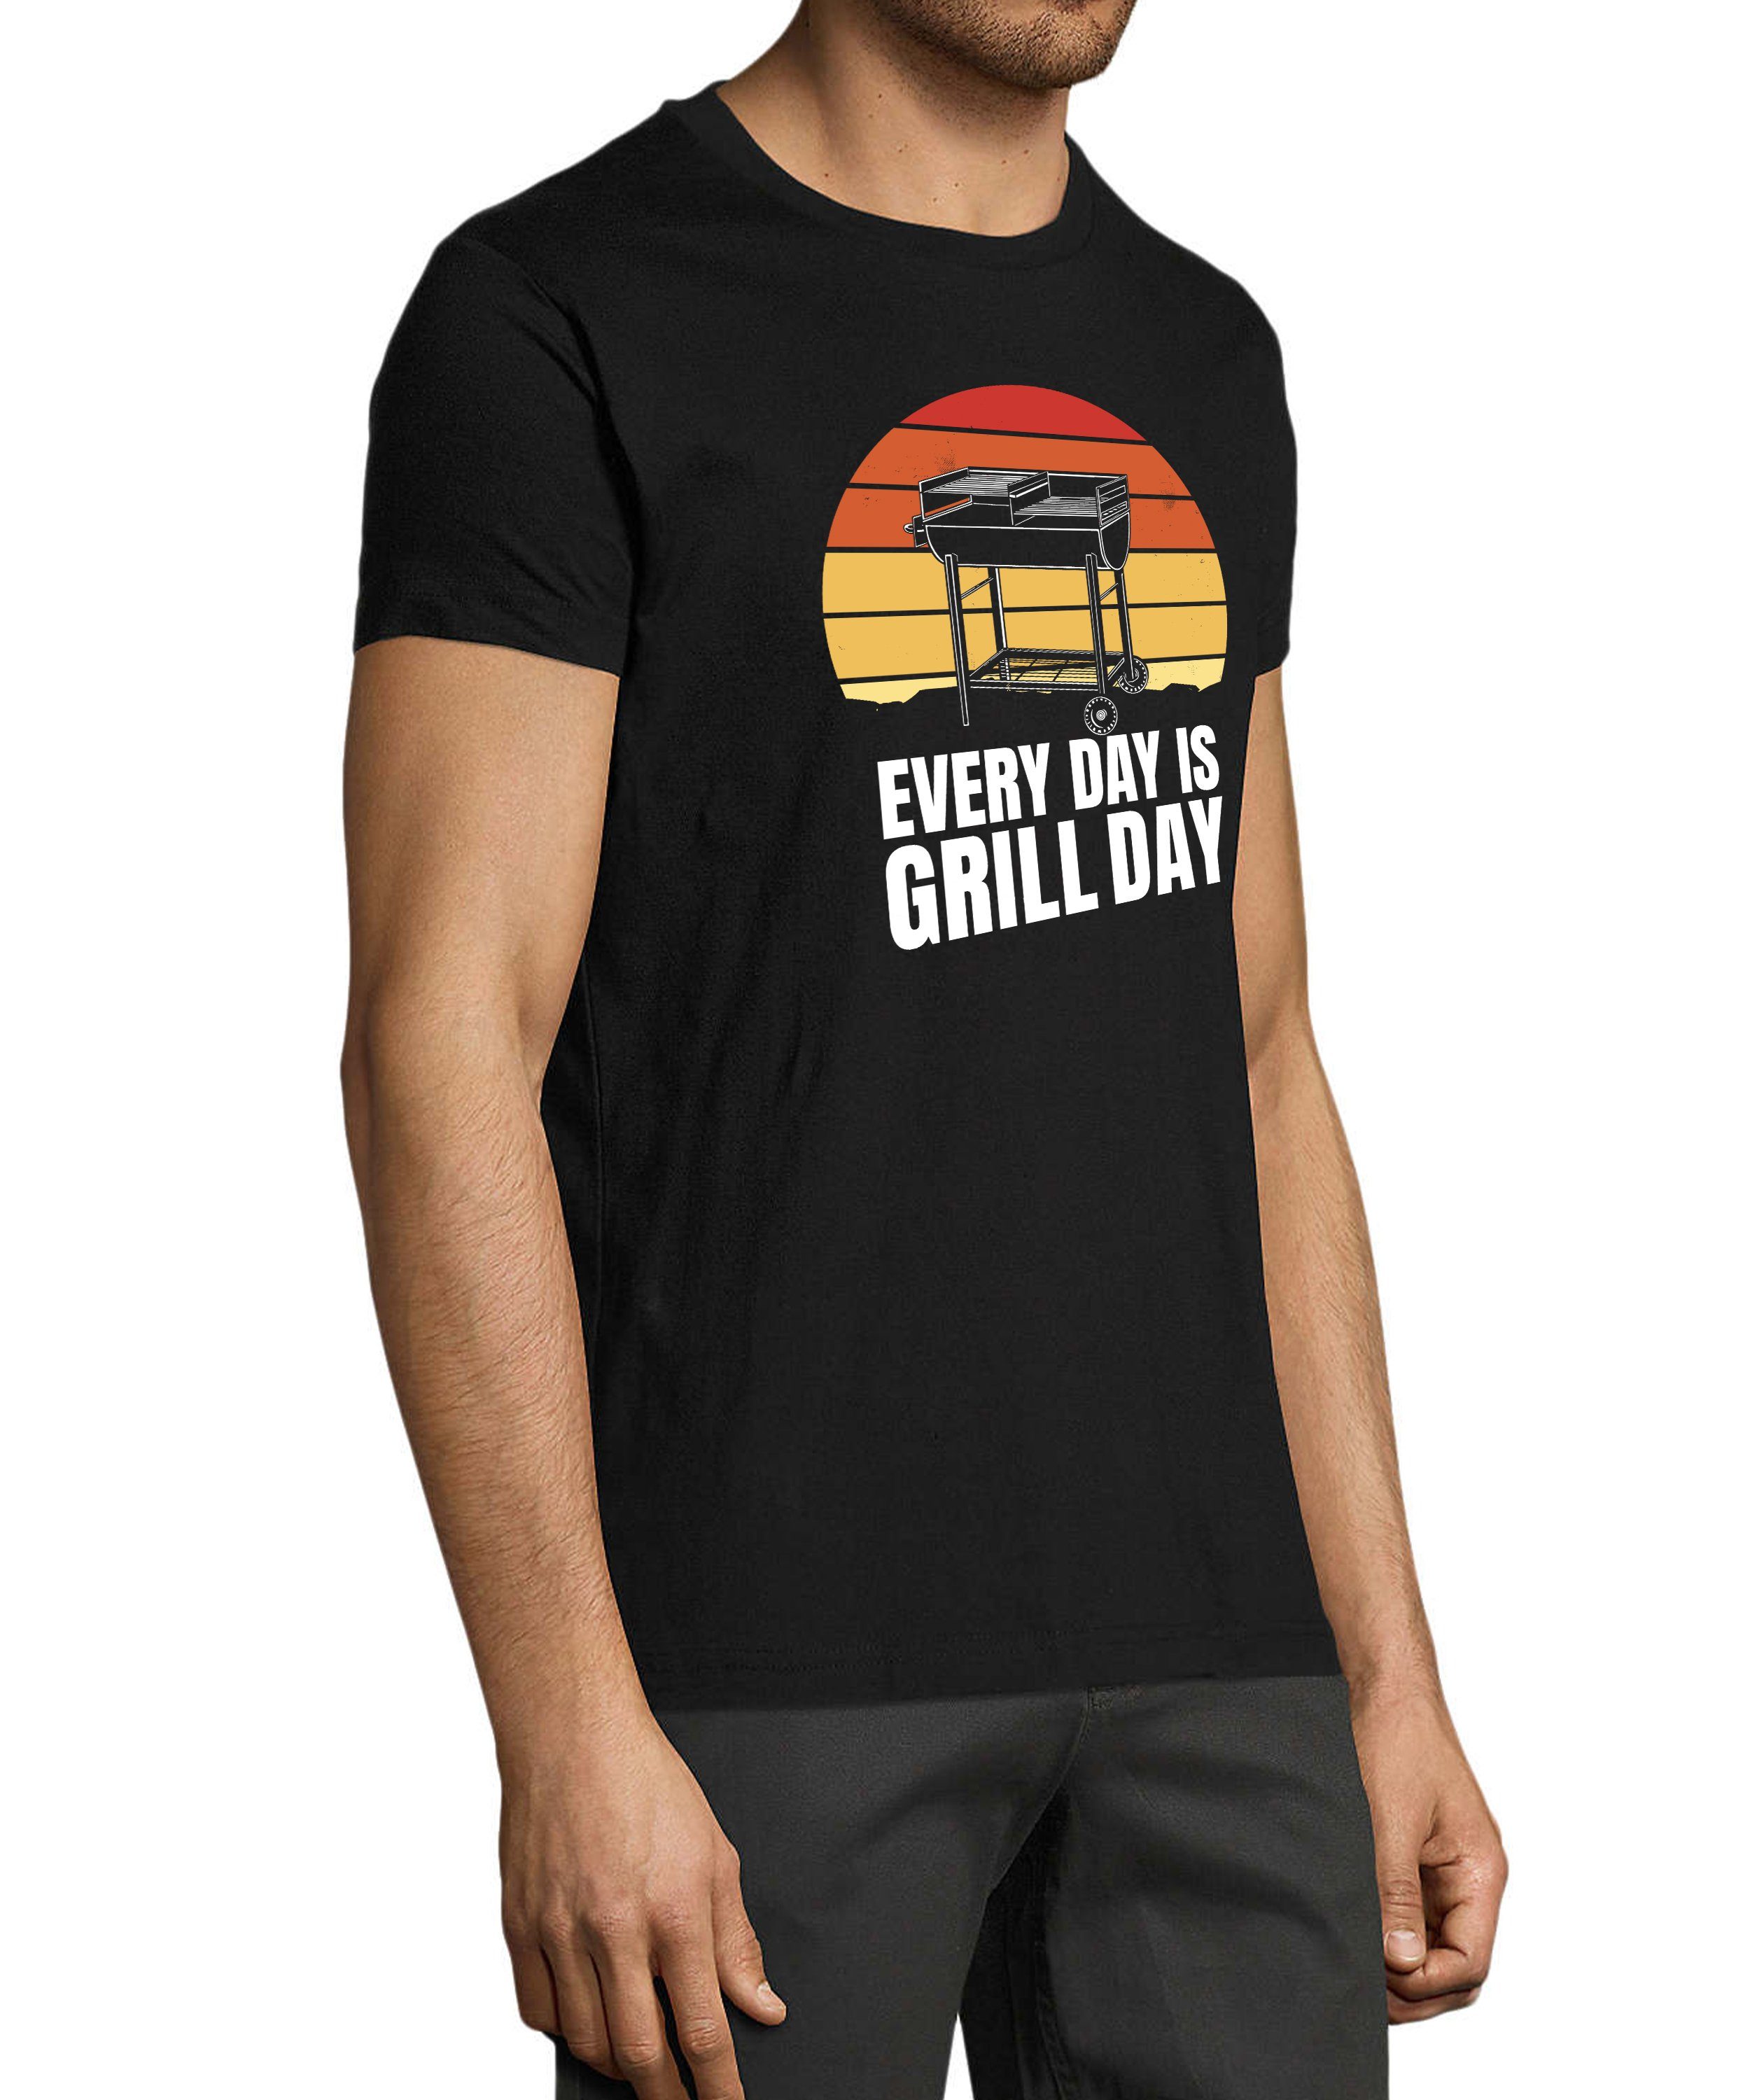 mit Herren - a T-Shirt Shirt i300 T-Shirt Every Grill Baumwollshirt Day Retro Print MyDesign24 Regular BBQ is Grill schwarz Day Fit, Aufdruck